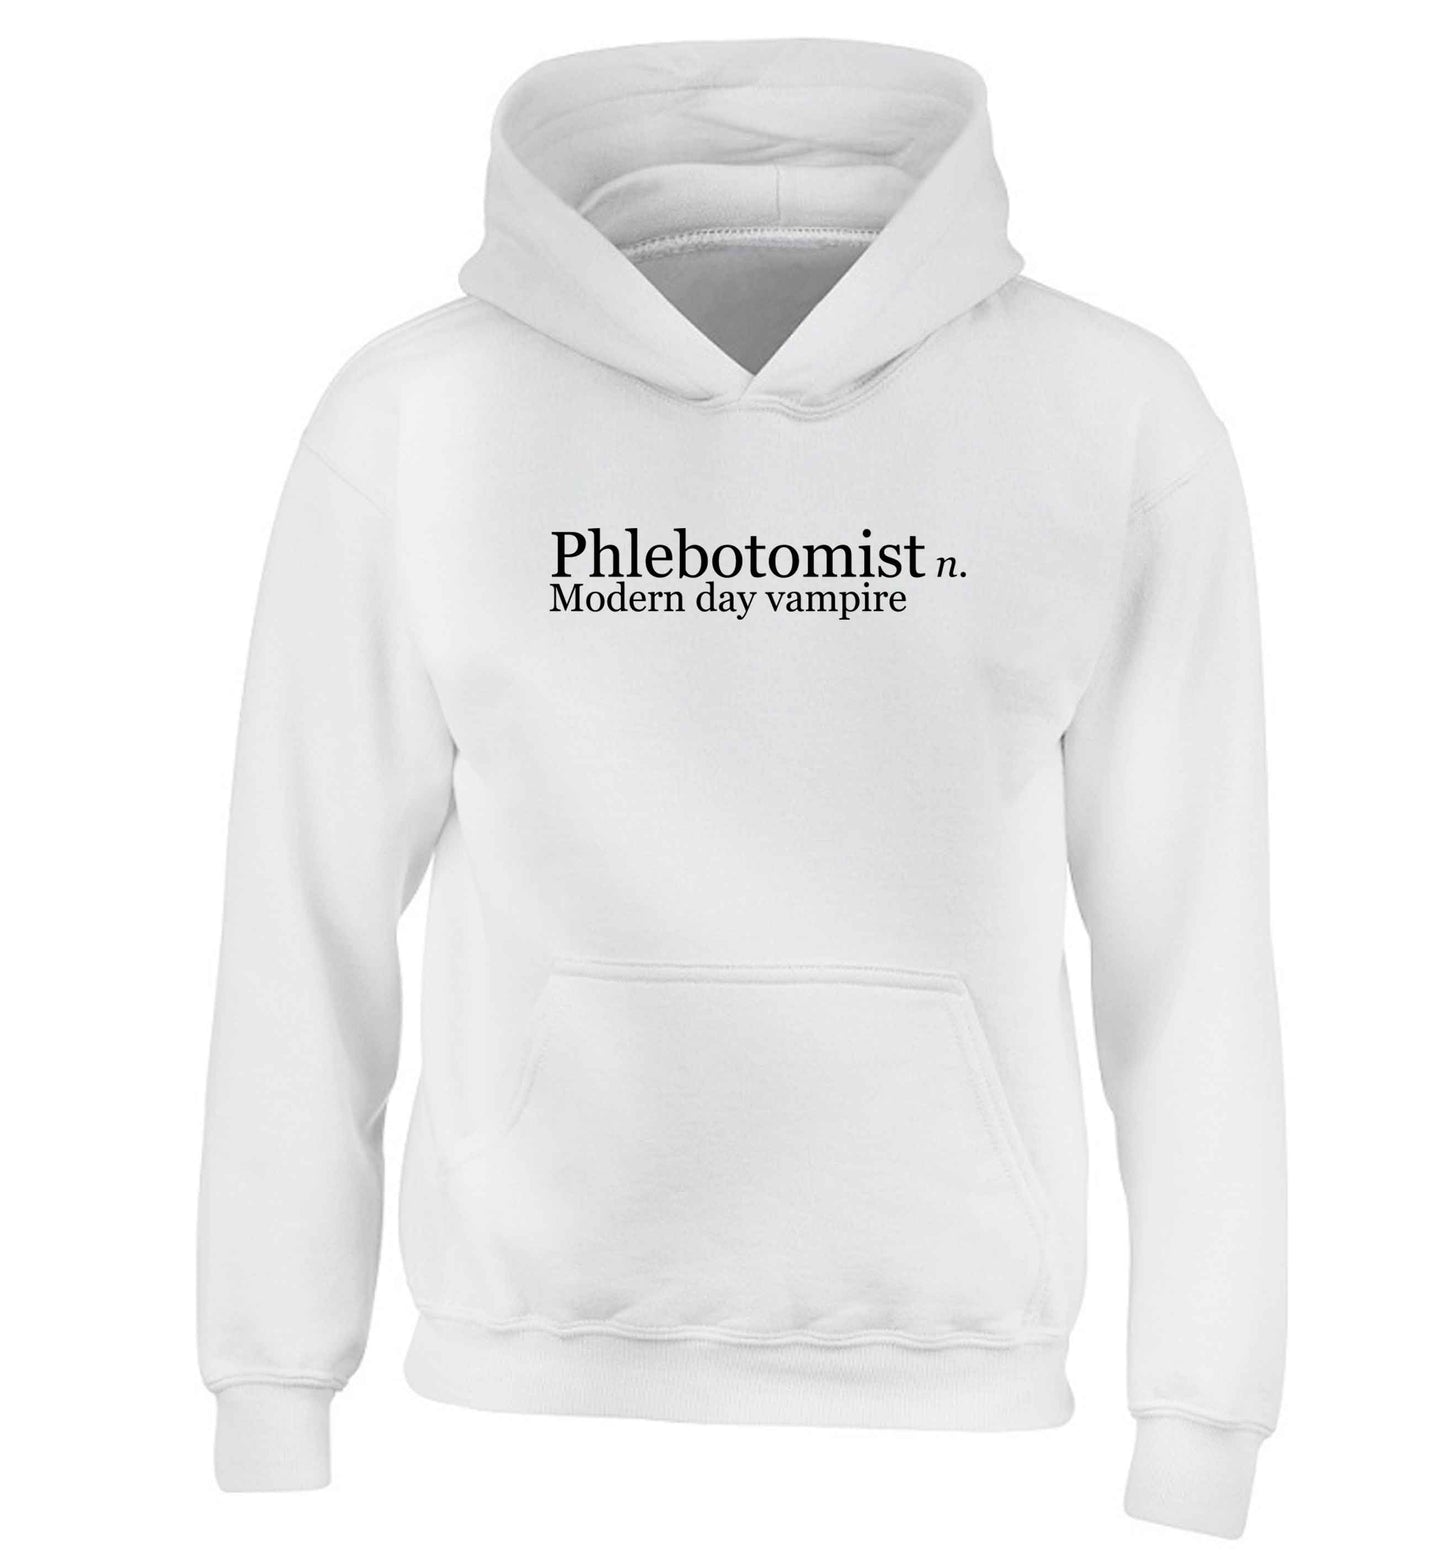 Phlebotomist - Modern day vampire children's white hoodie 12-13 Years